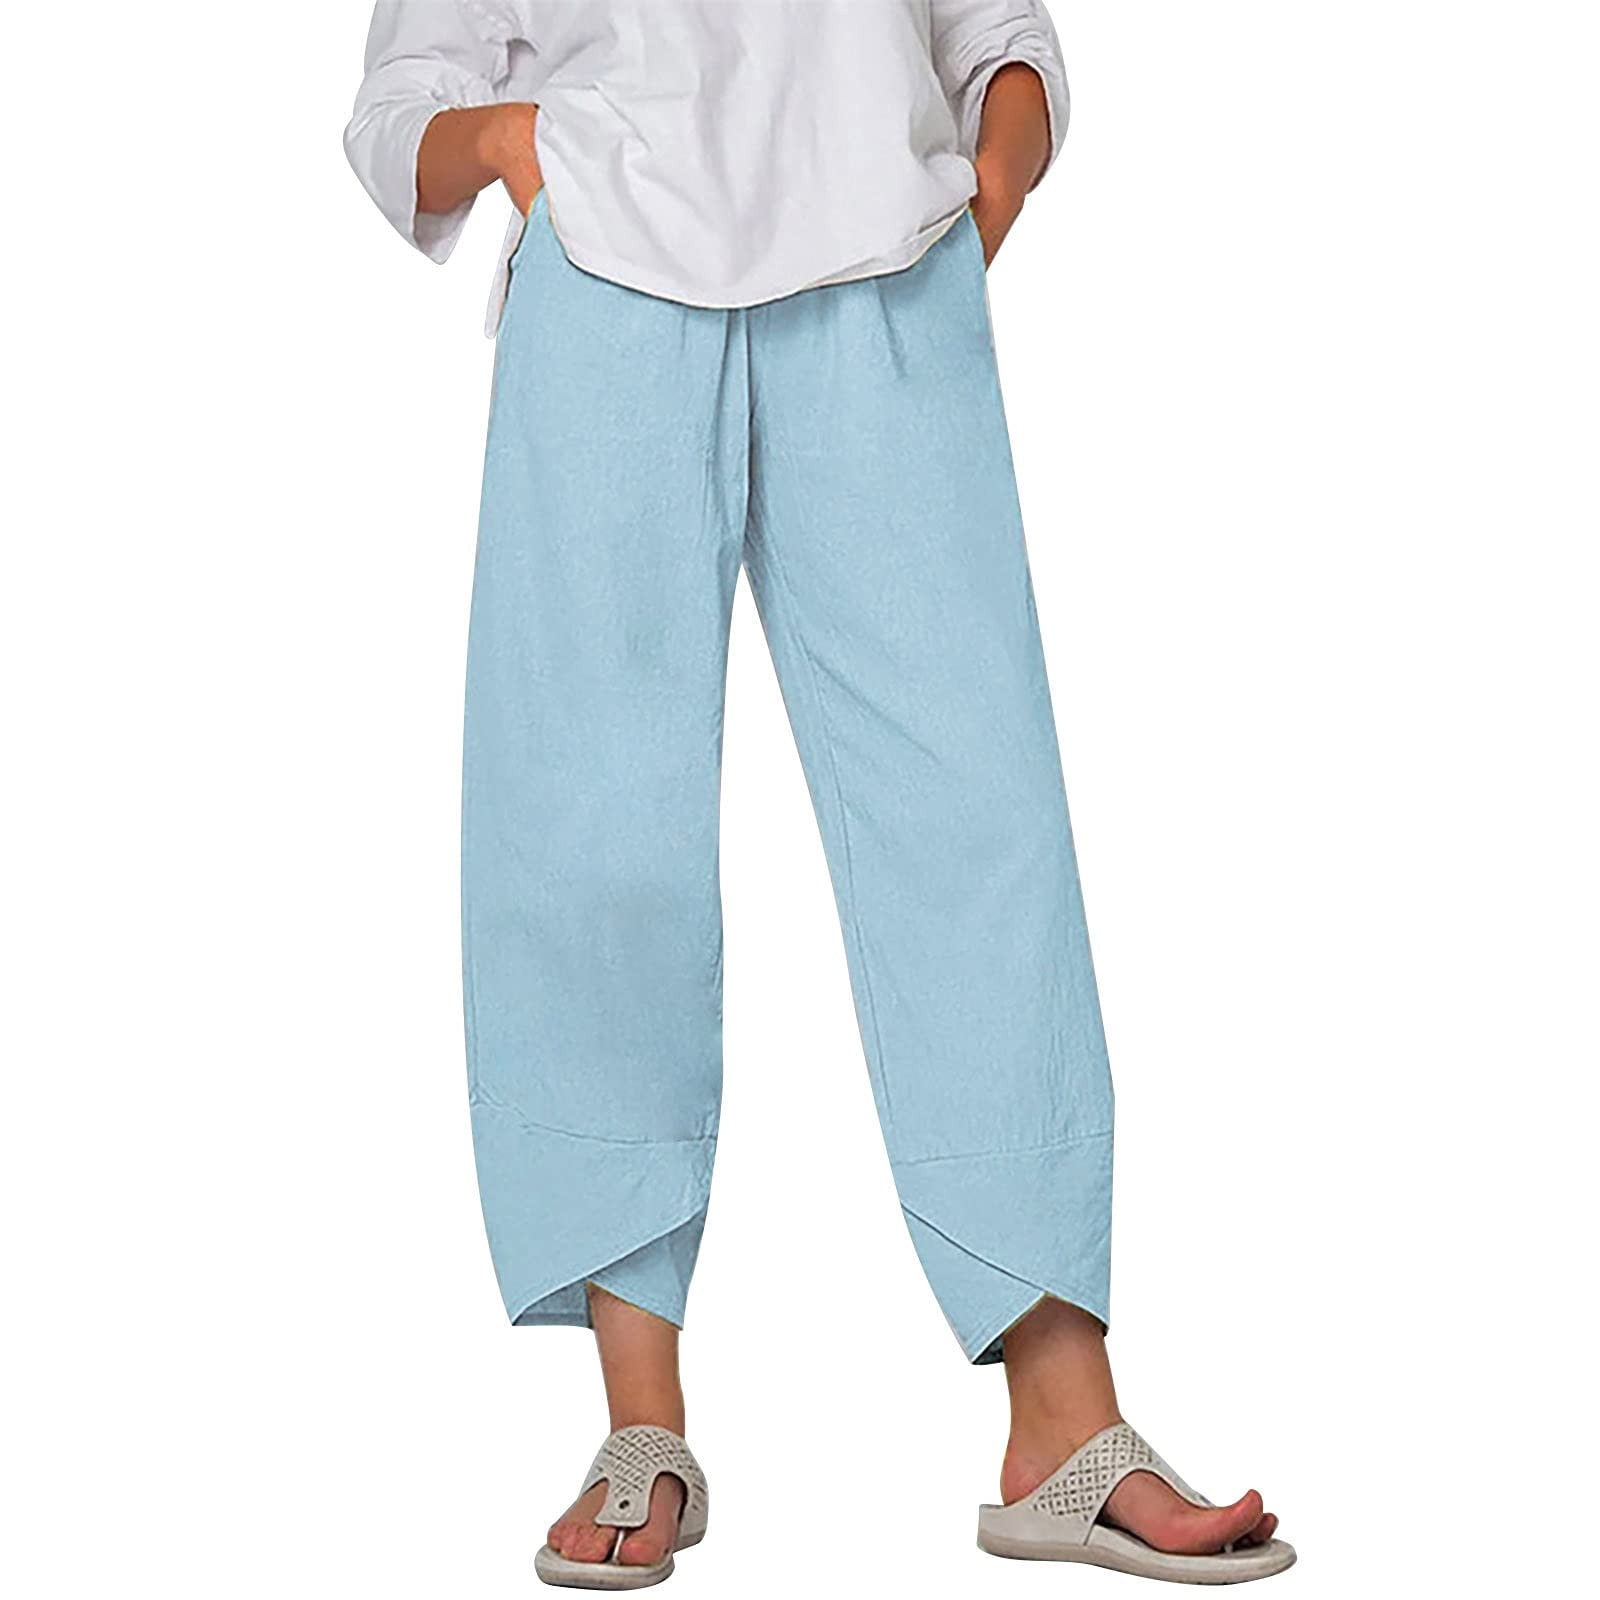 Capri Pants for Women Cotton Linen Wide Leg Capris Womens Summer